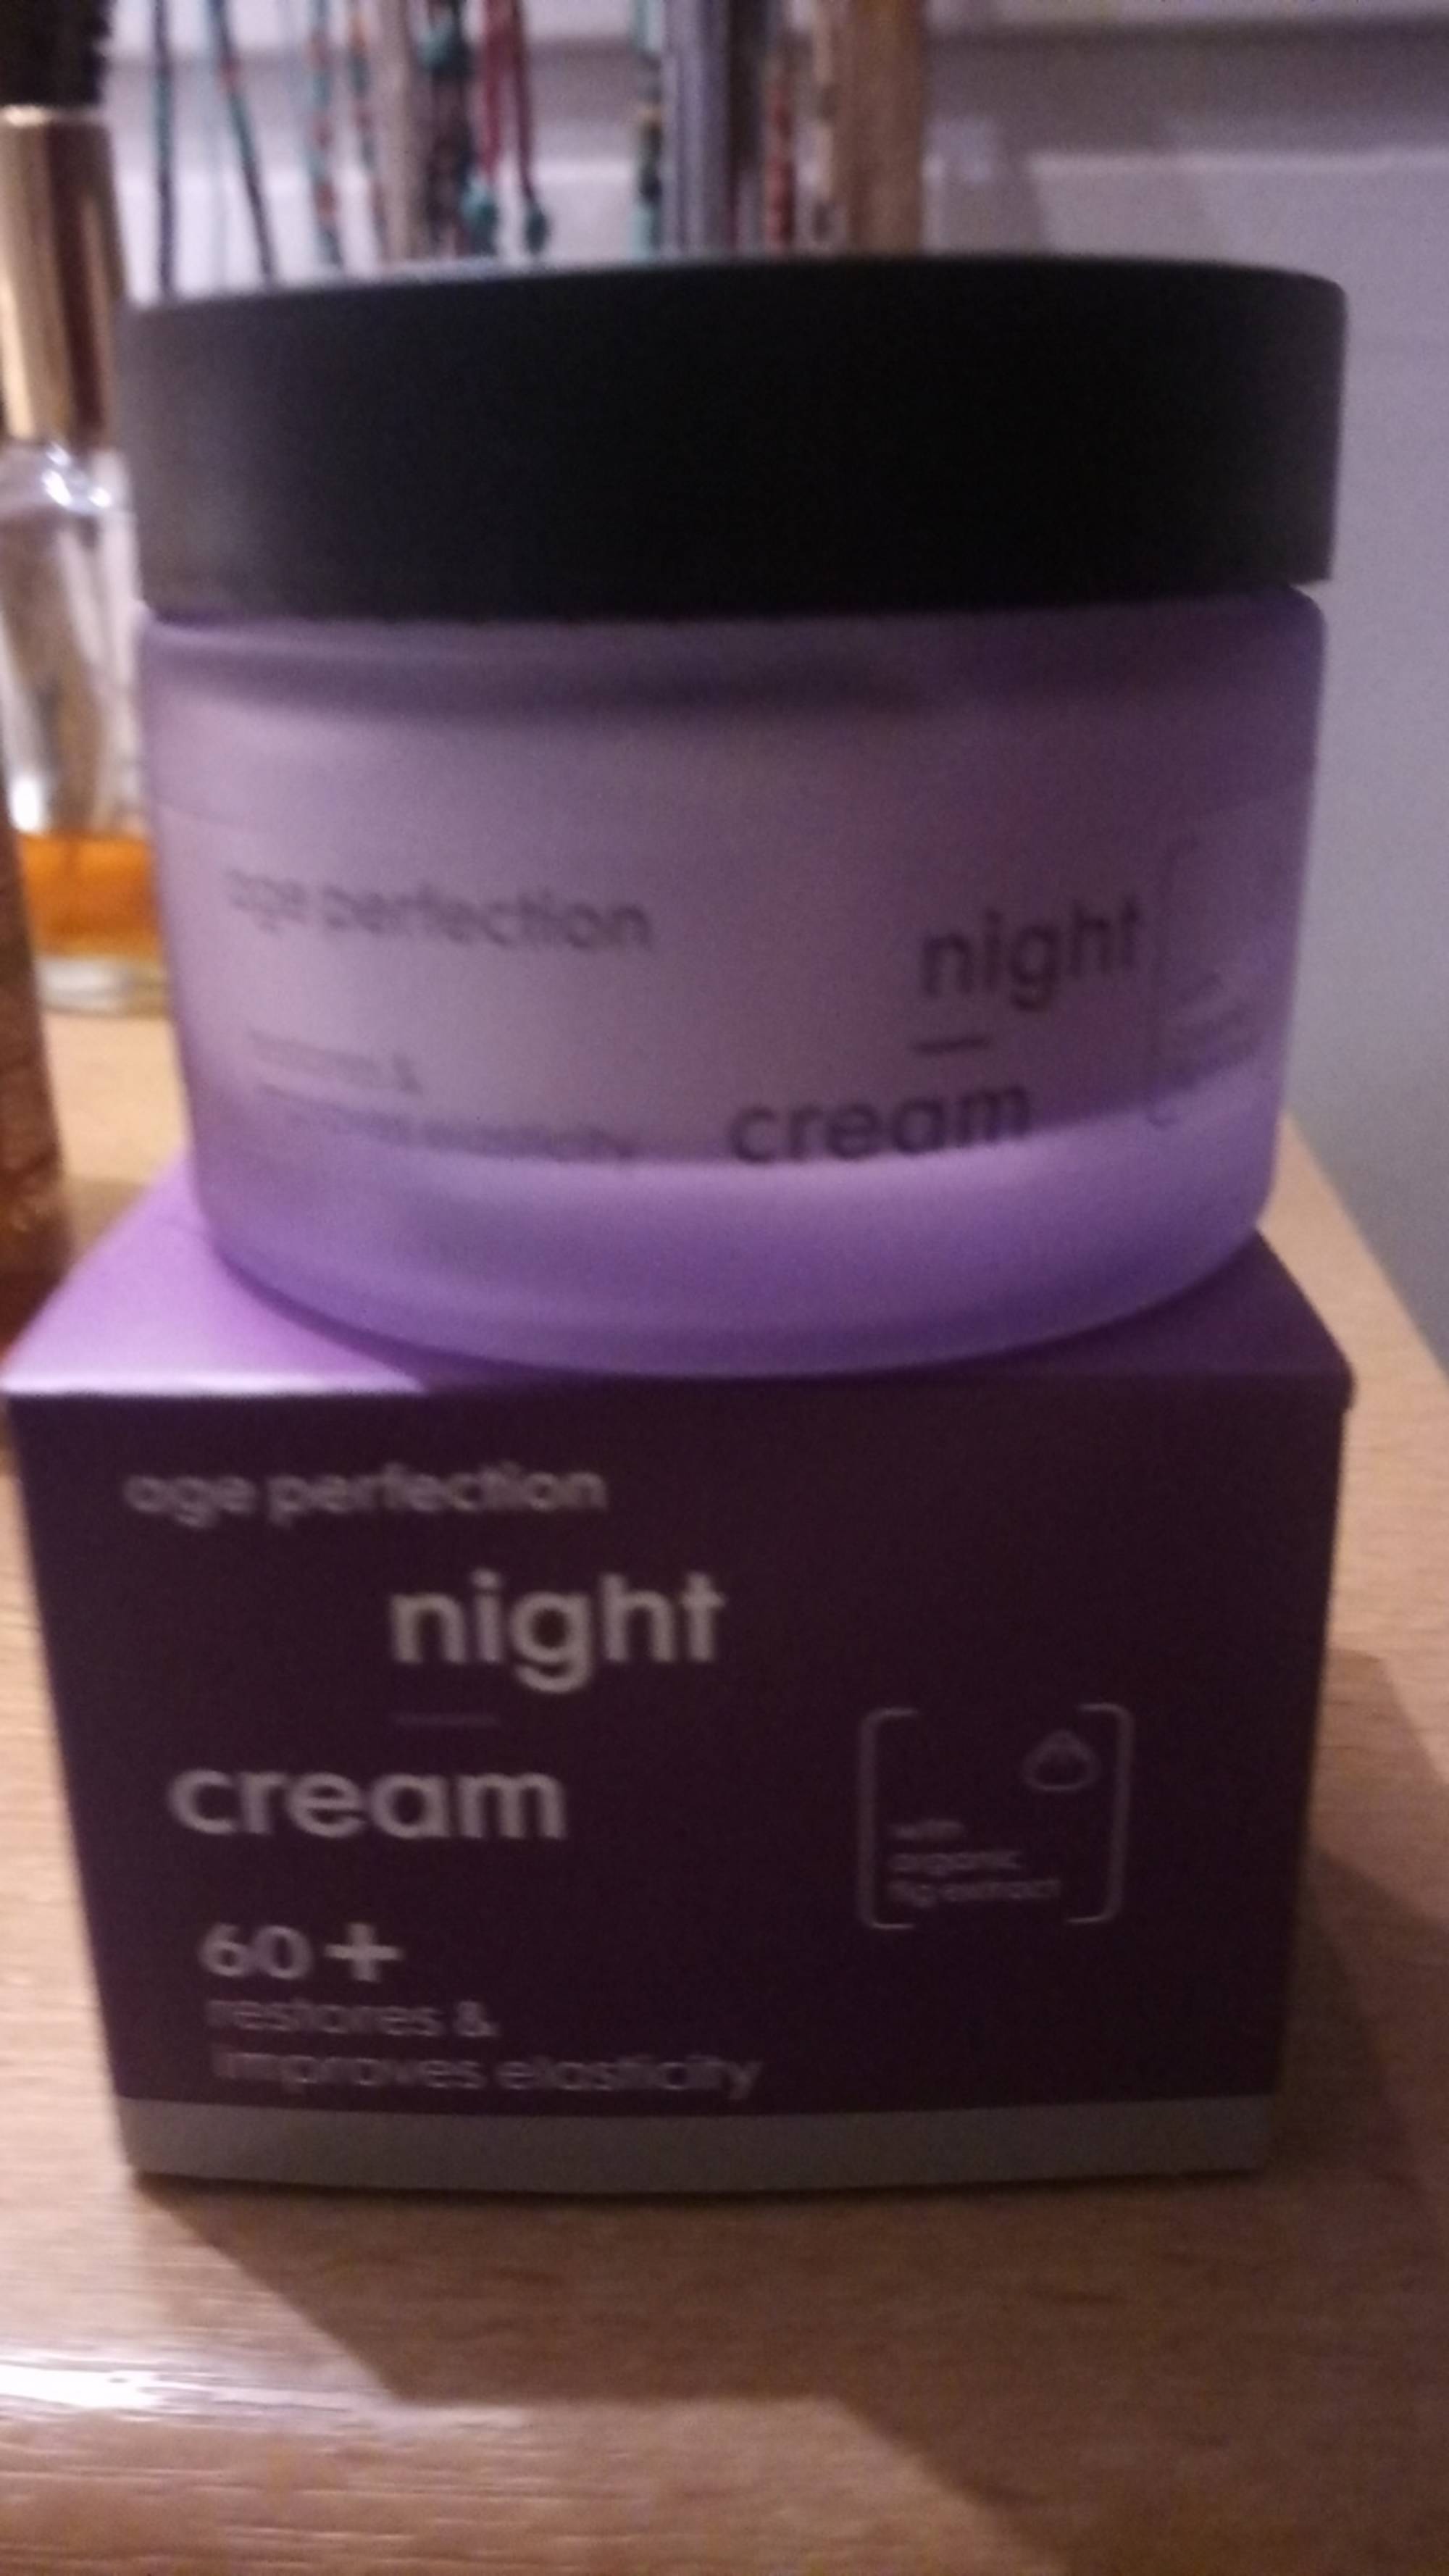 HEMA - Age perfection - Night cream 60+